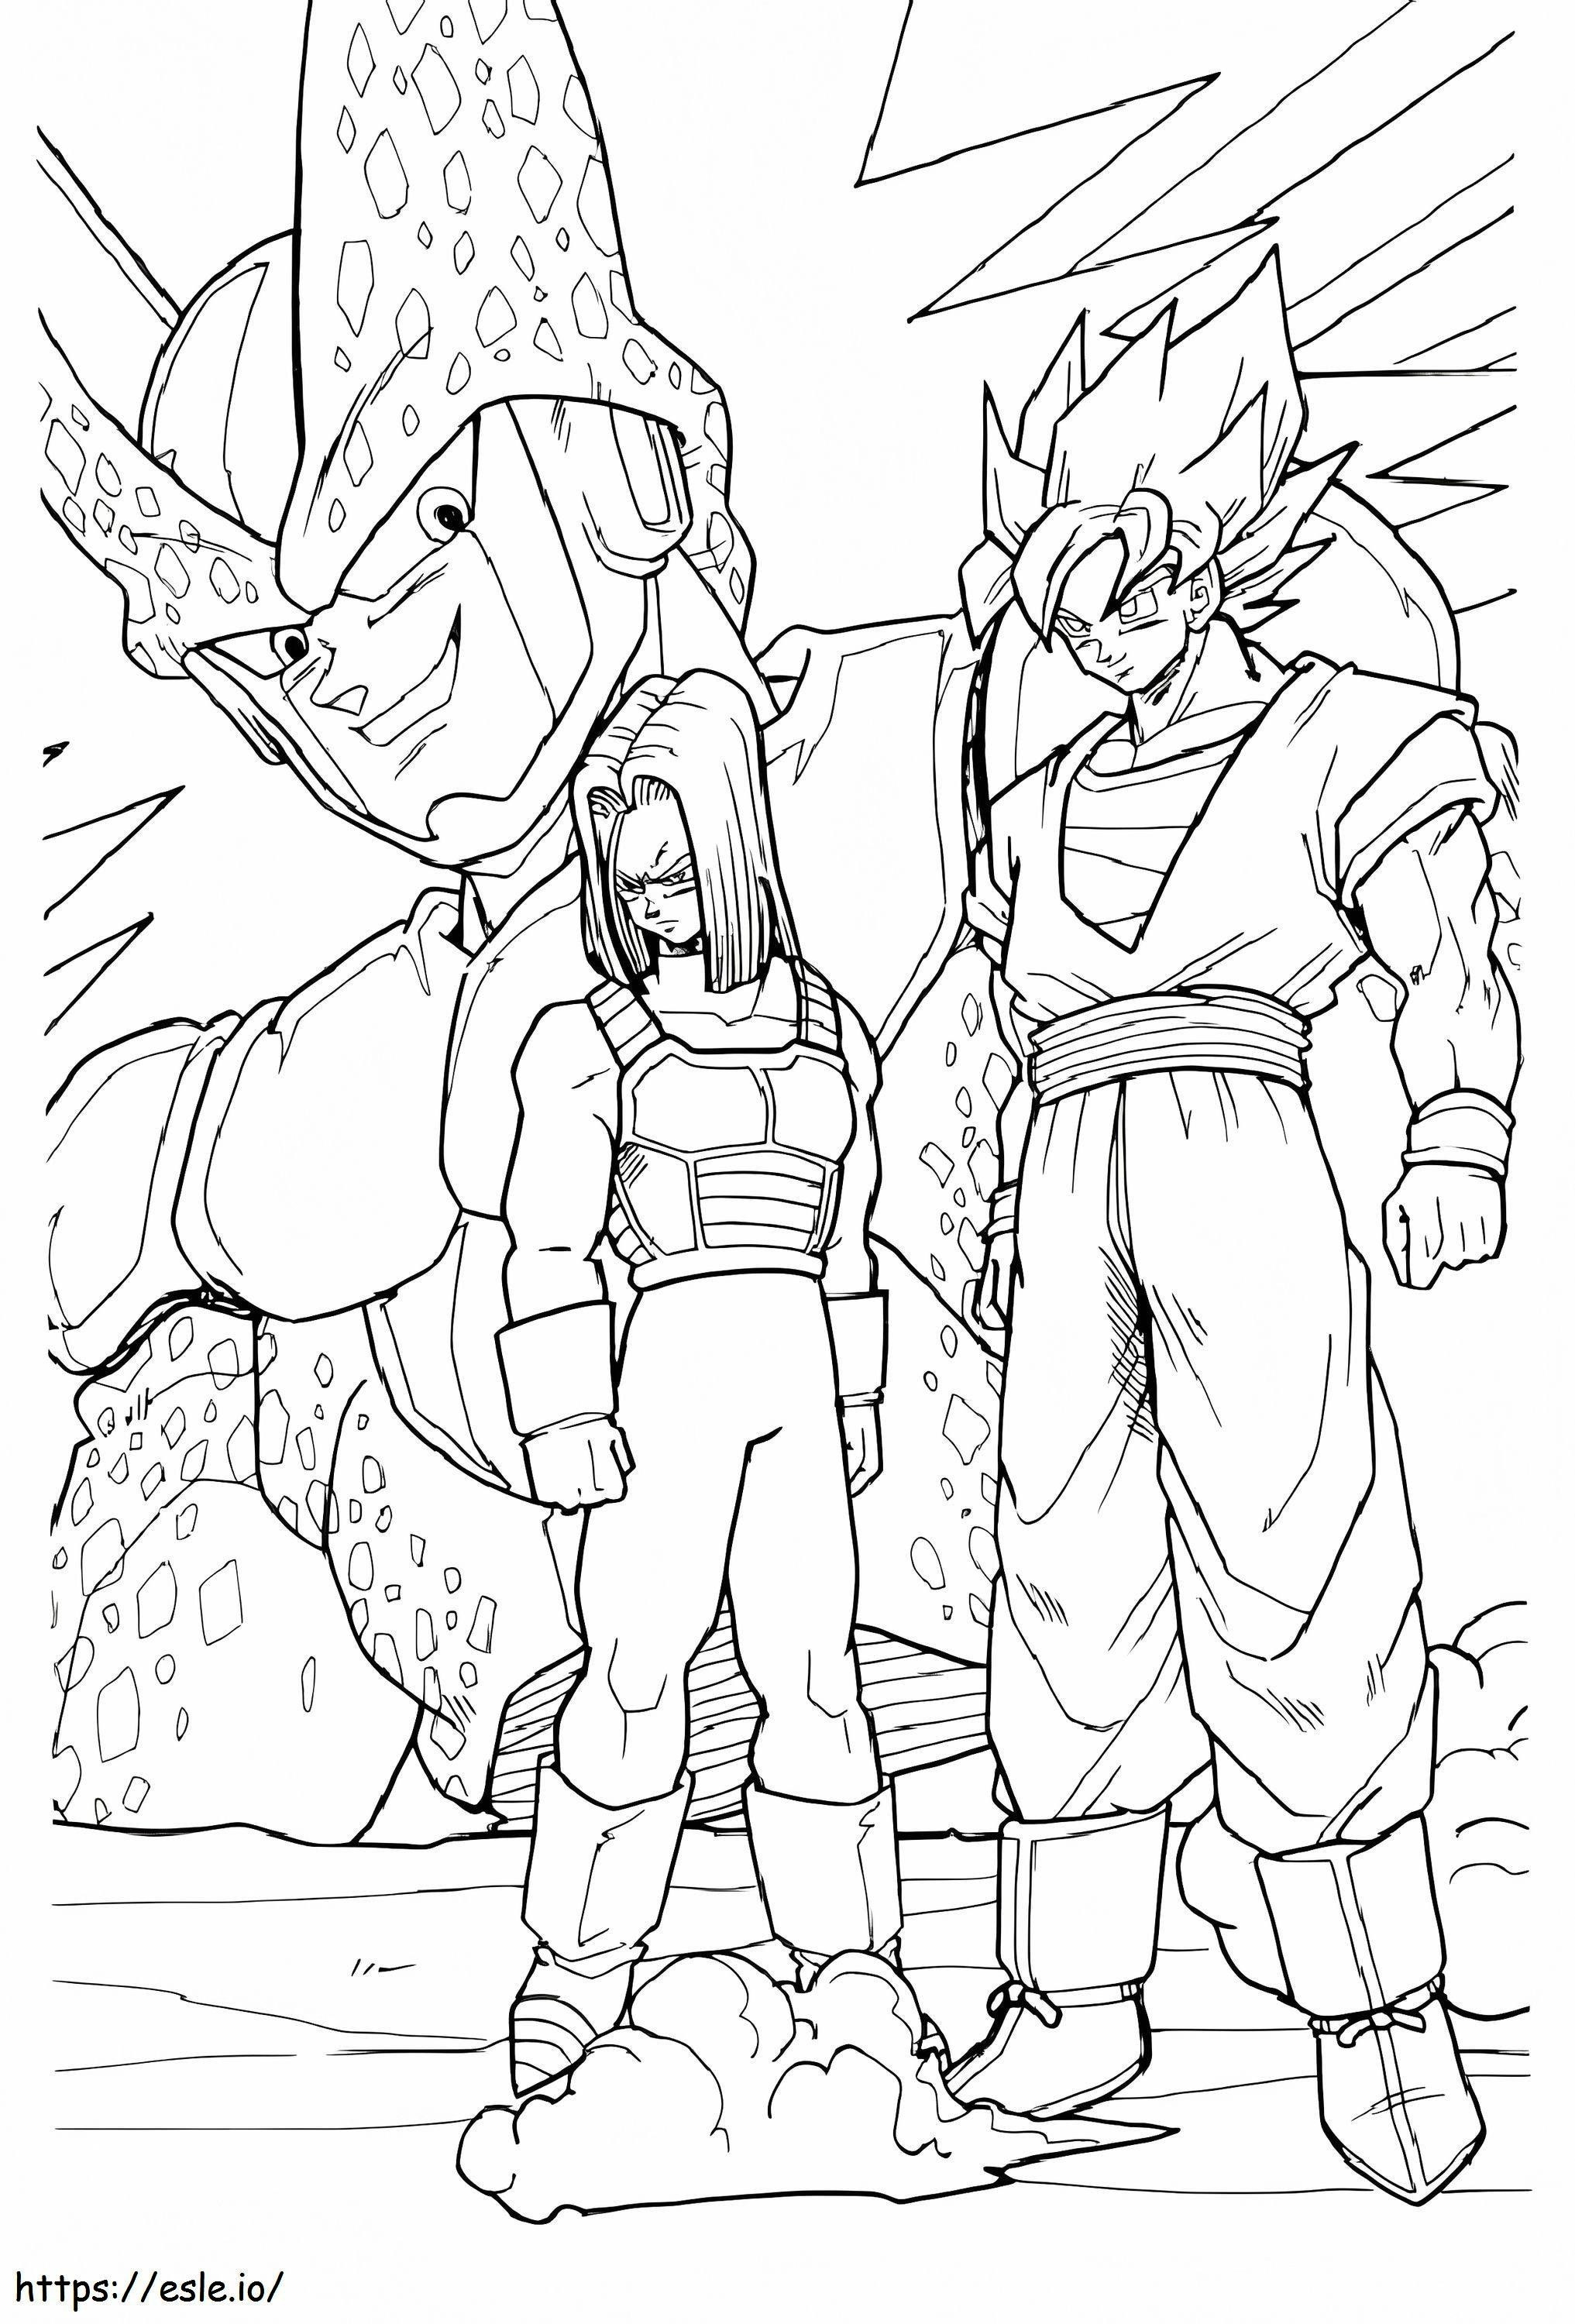 Dragon Ball Z 2 coloring page